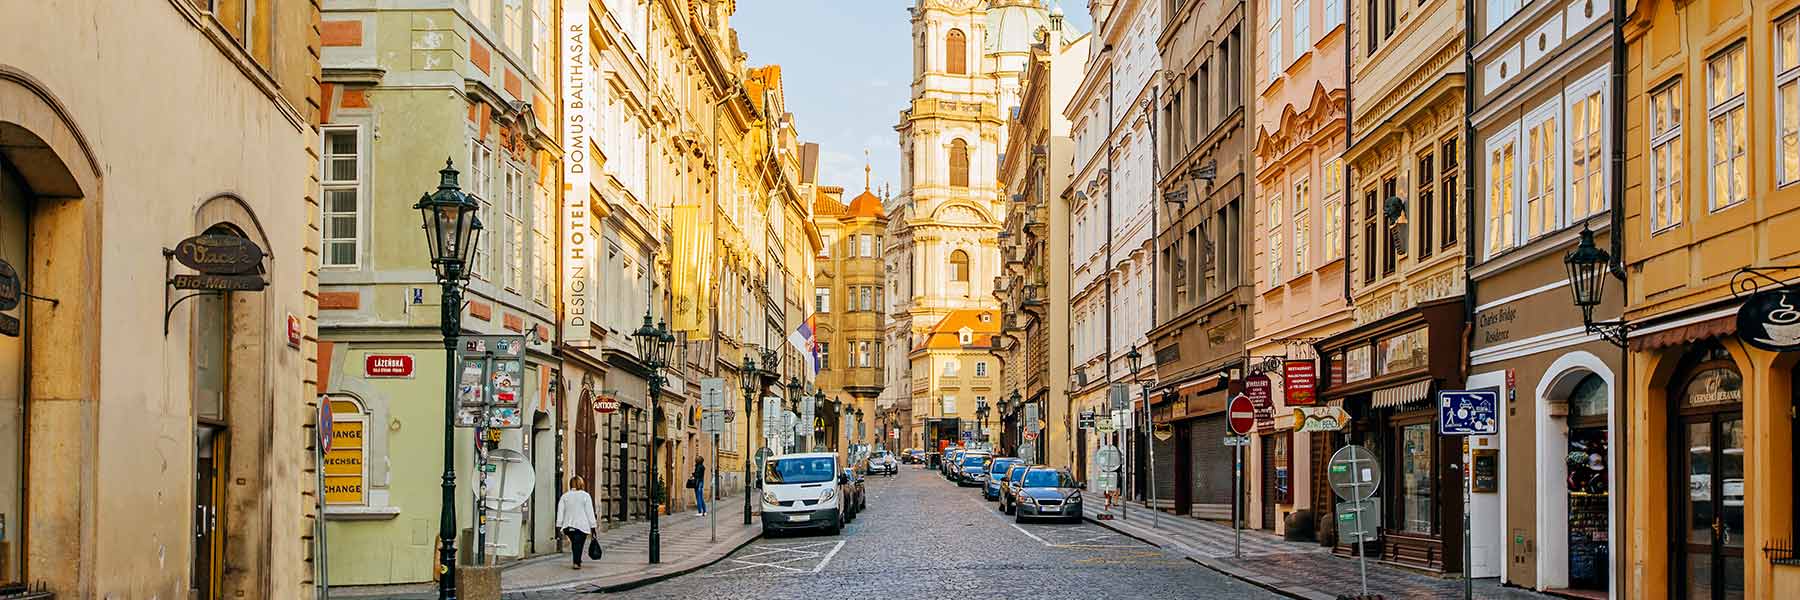 A city street in Prague